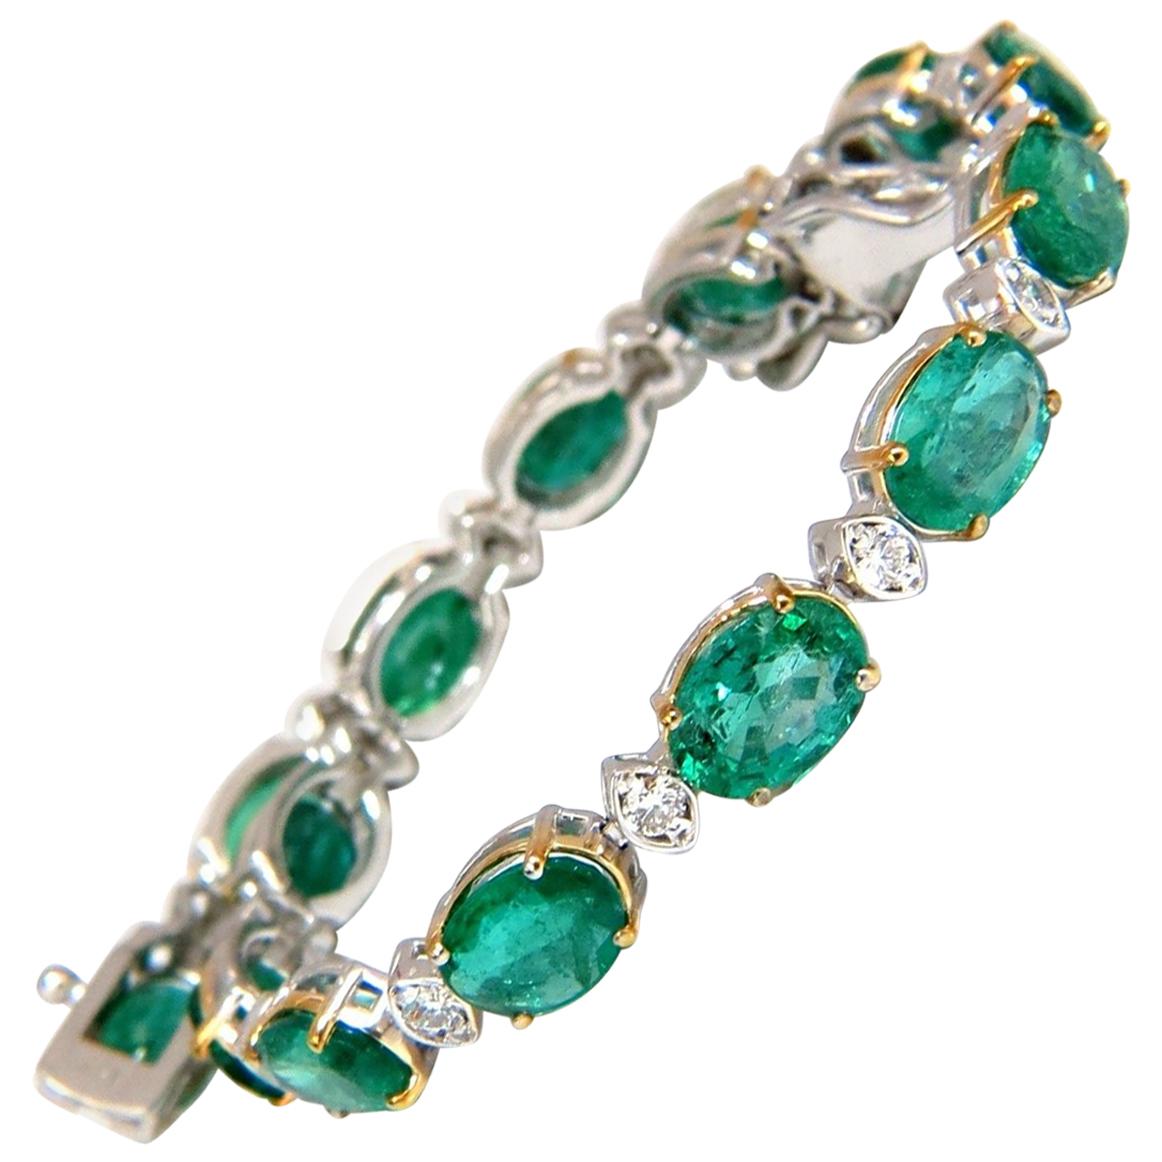 10.79ct bright forest vivid green natural emerald diamonds tennis bracelet 14kt